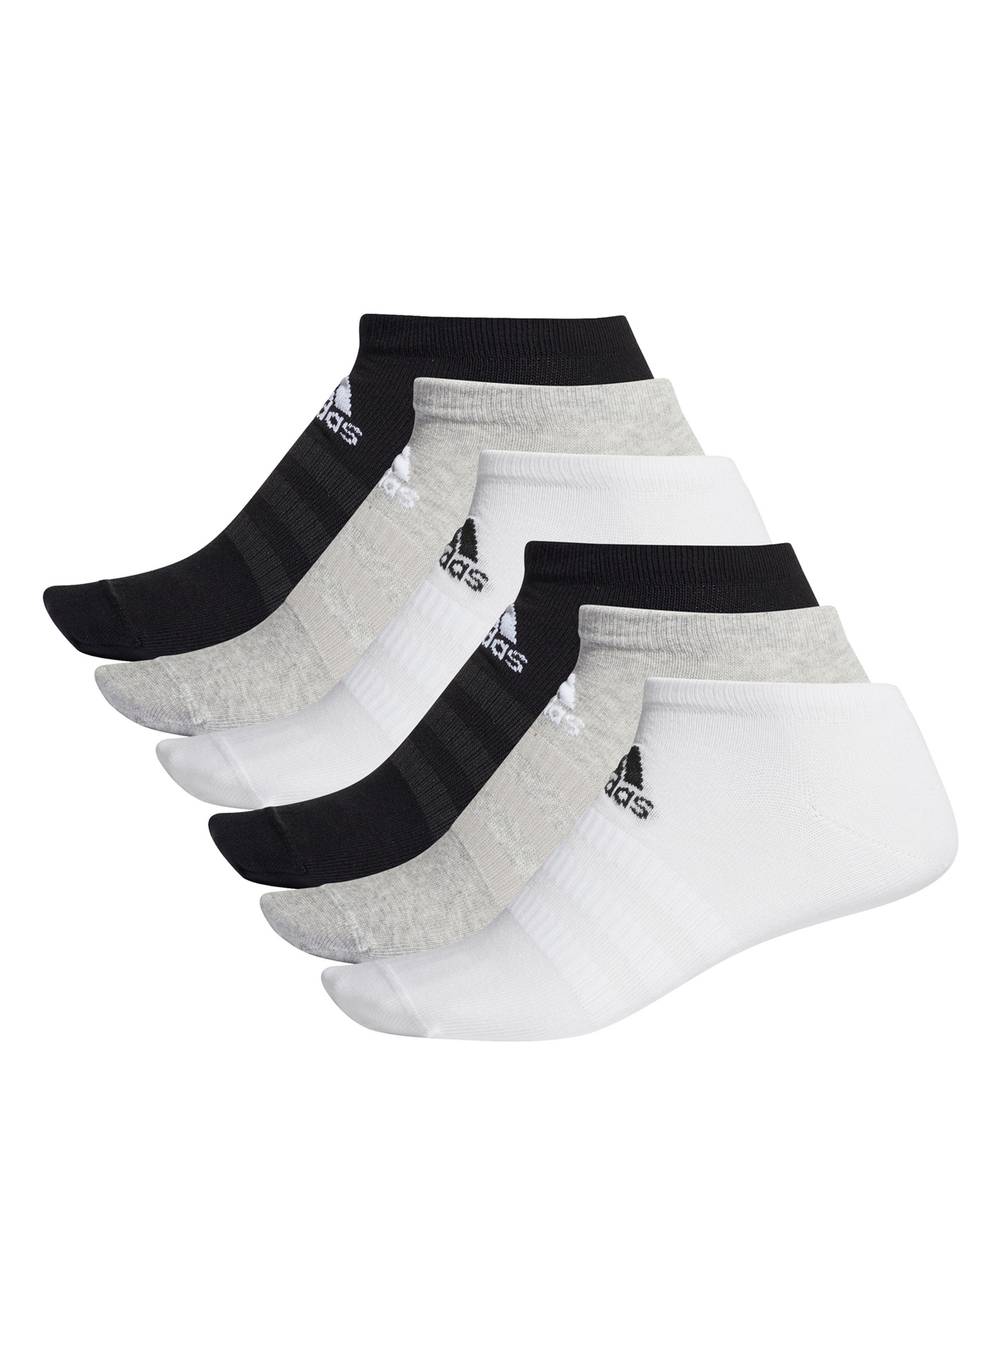 Adidas pack 6 calcetines tobilleros (color: diseño 1. talla: s)